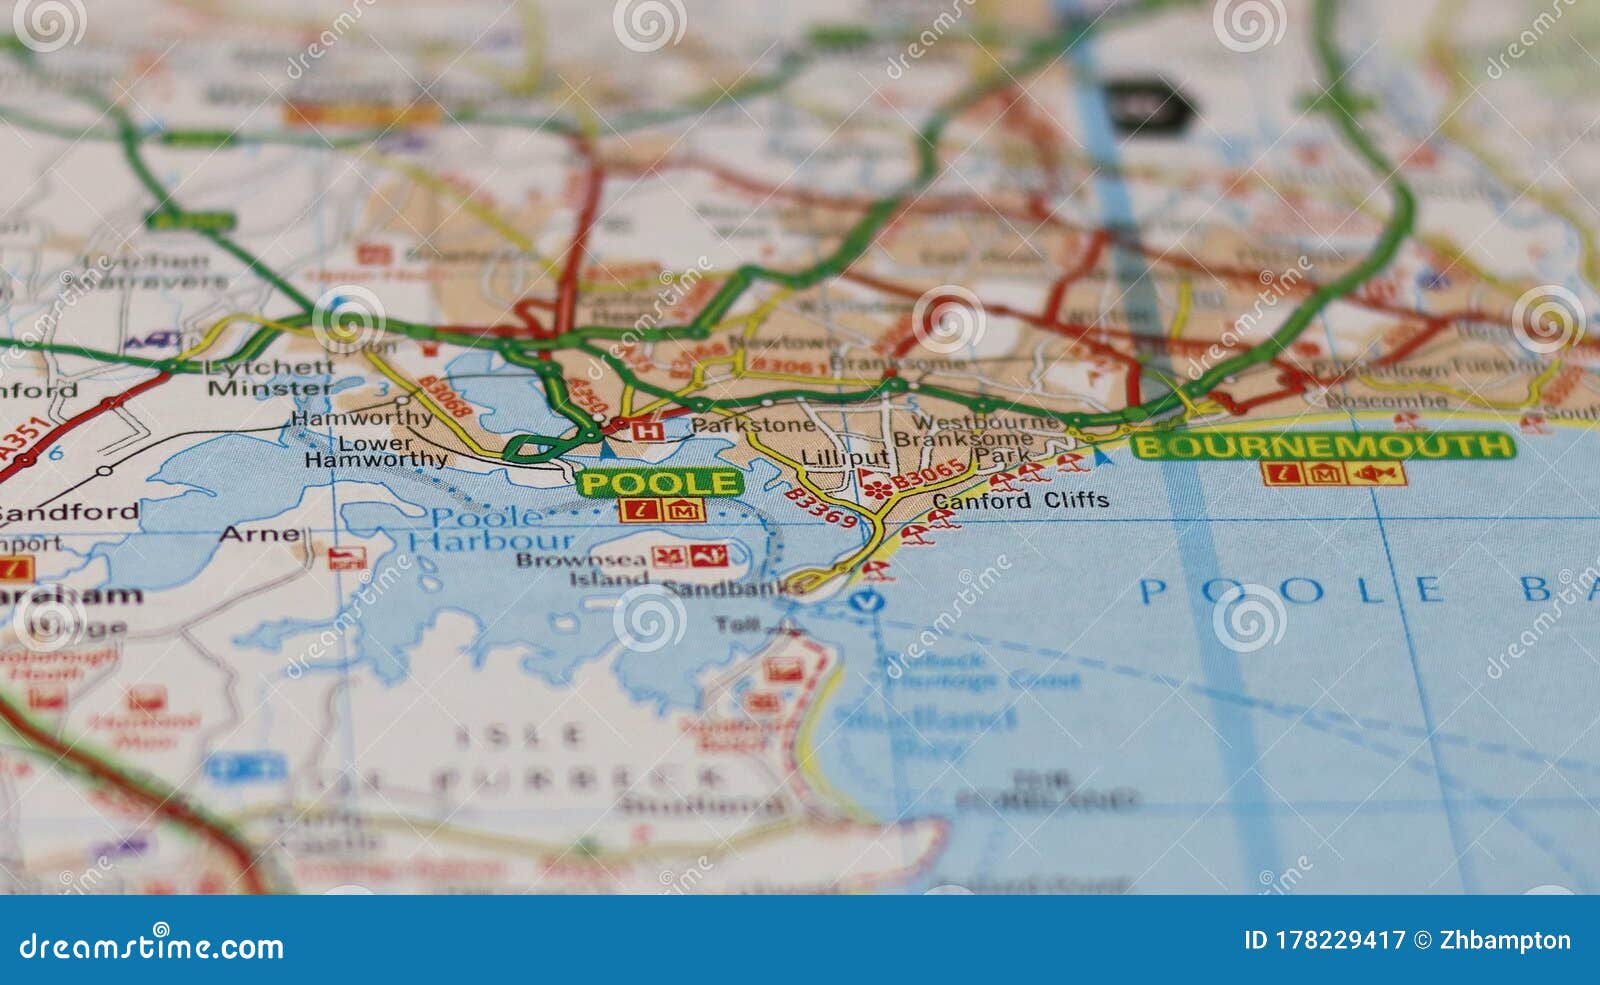 Dorset England UK on a Map Stock Image - Image of position, journey: 178229417